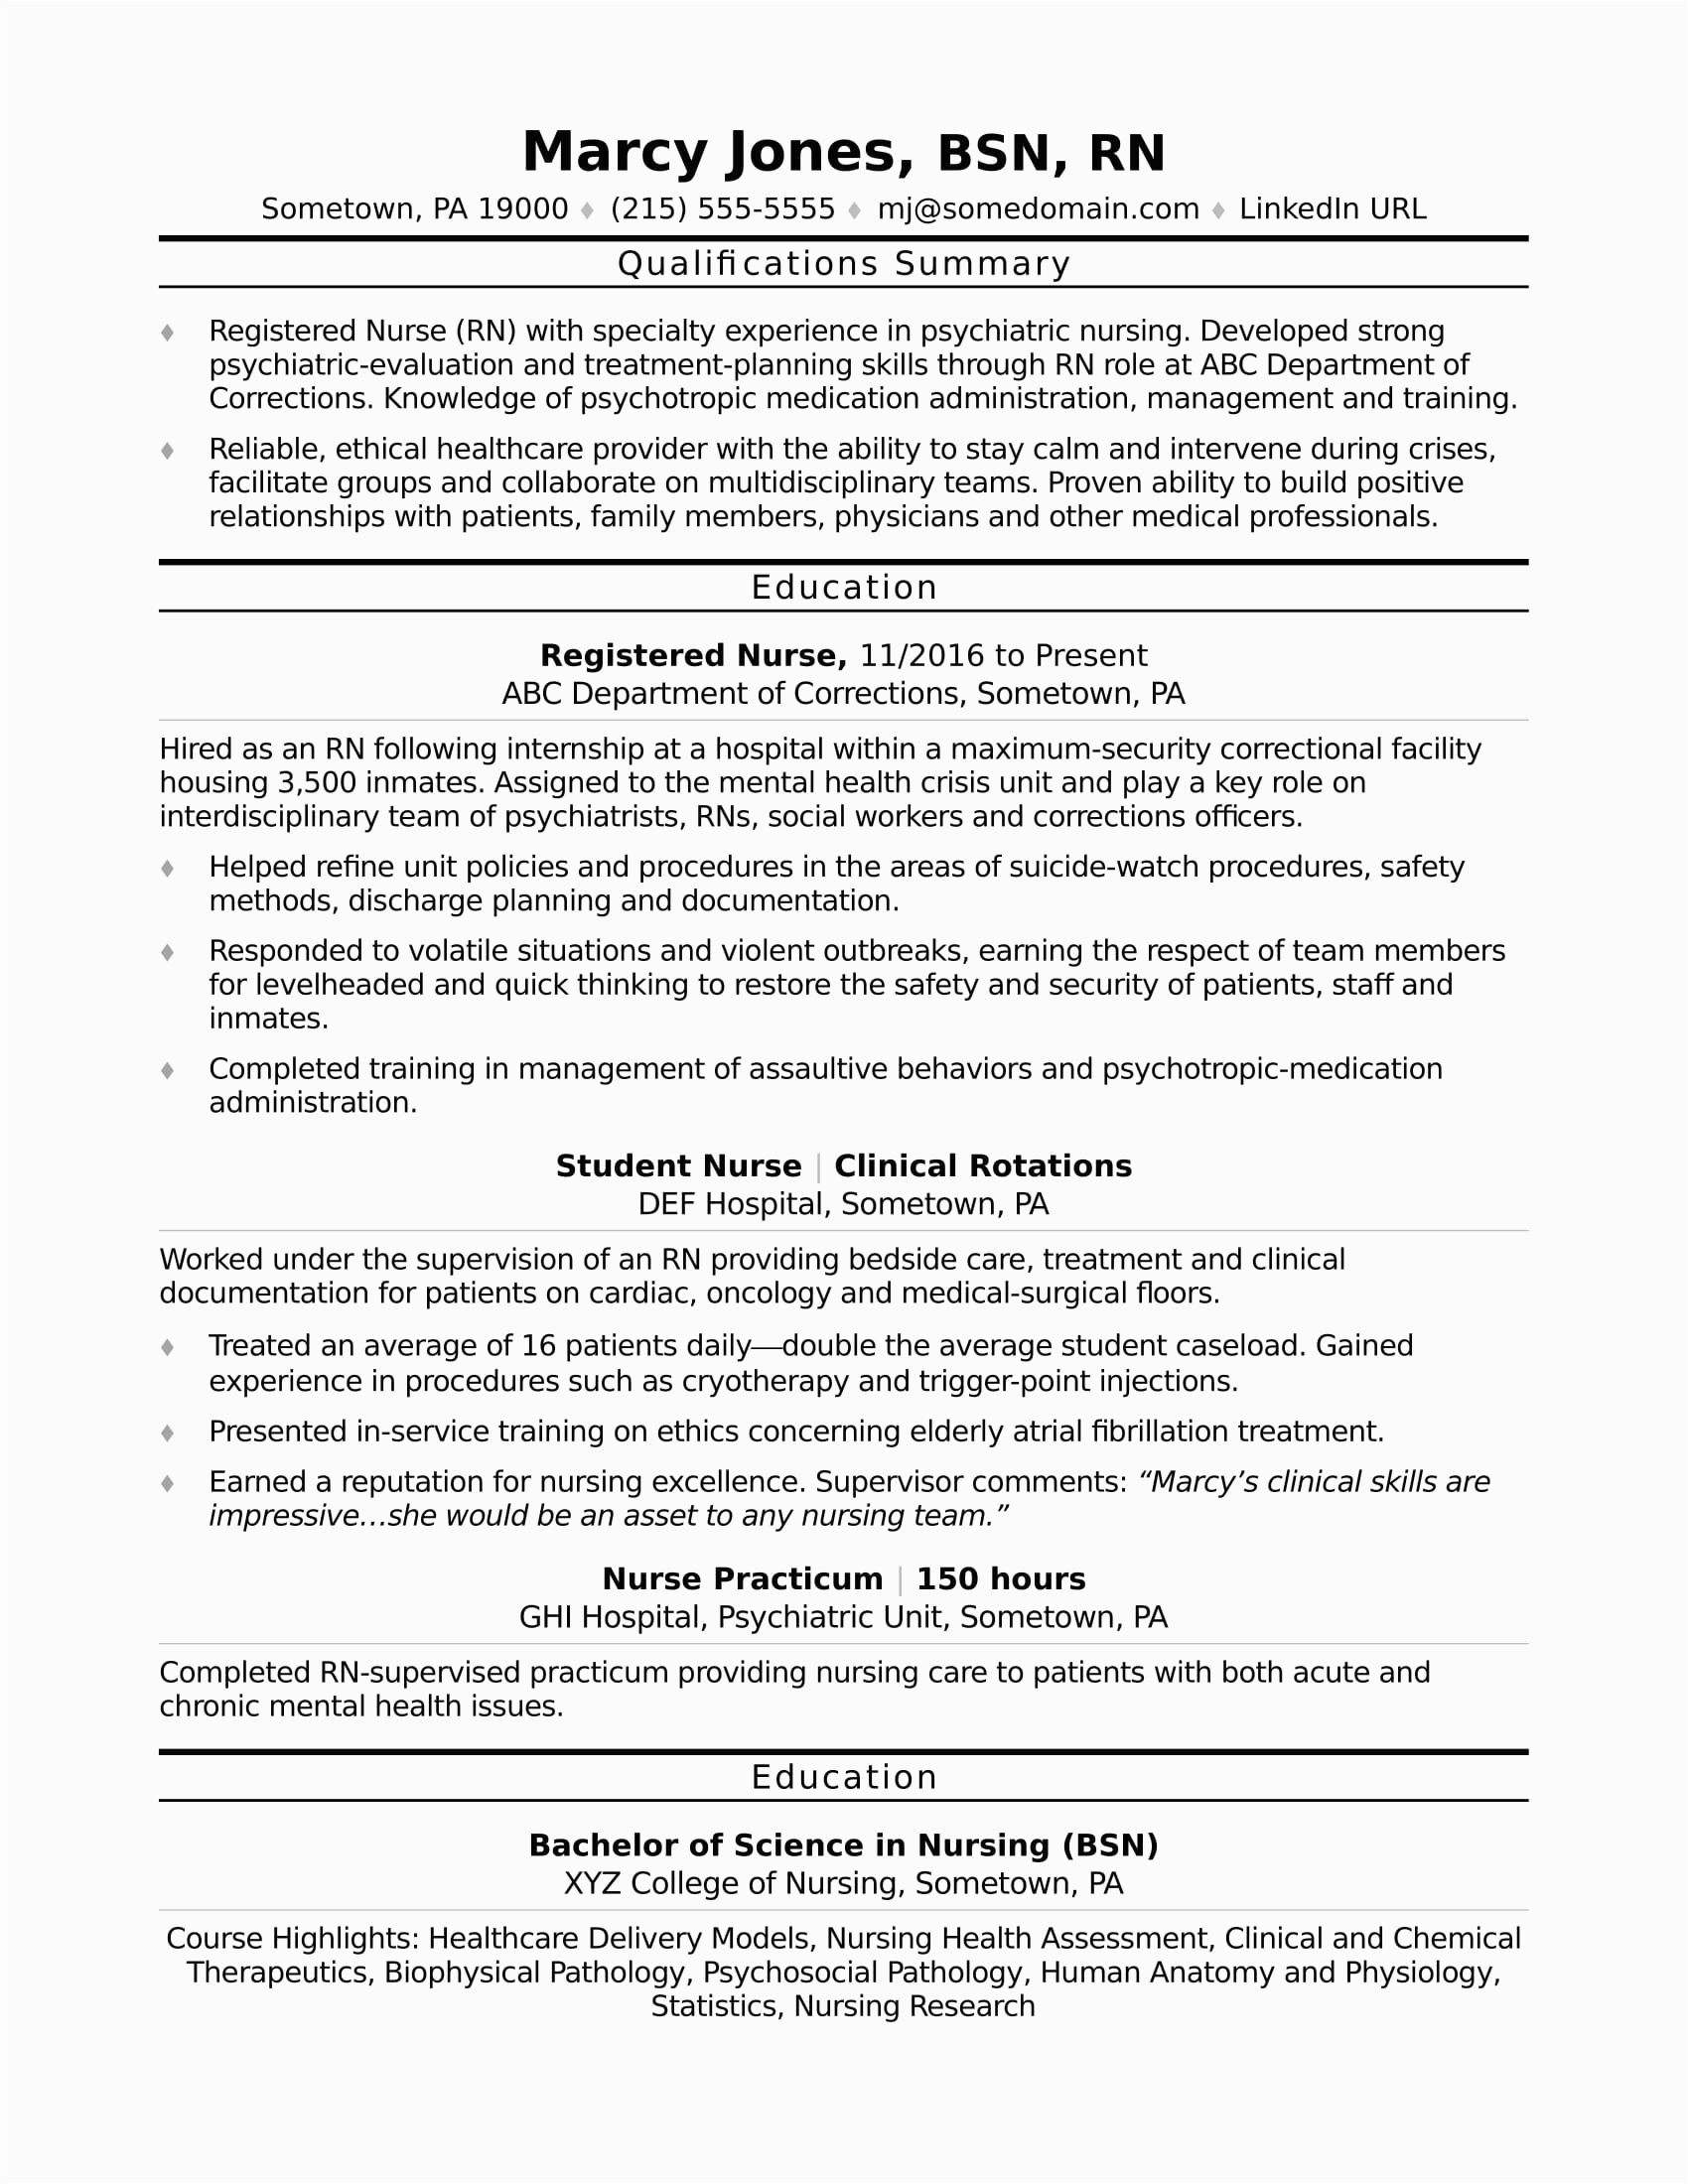 Sample Resume for Registered Nurse with Experience Registered Nurse Rn Resume Sample